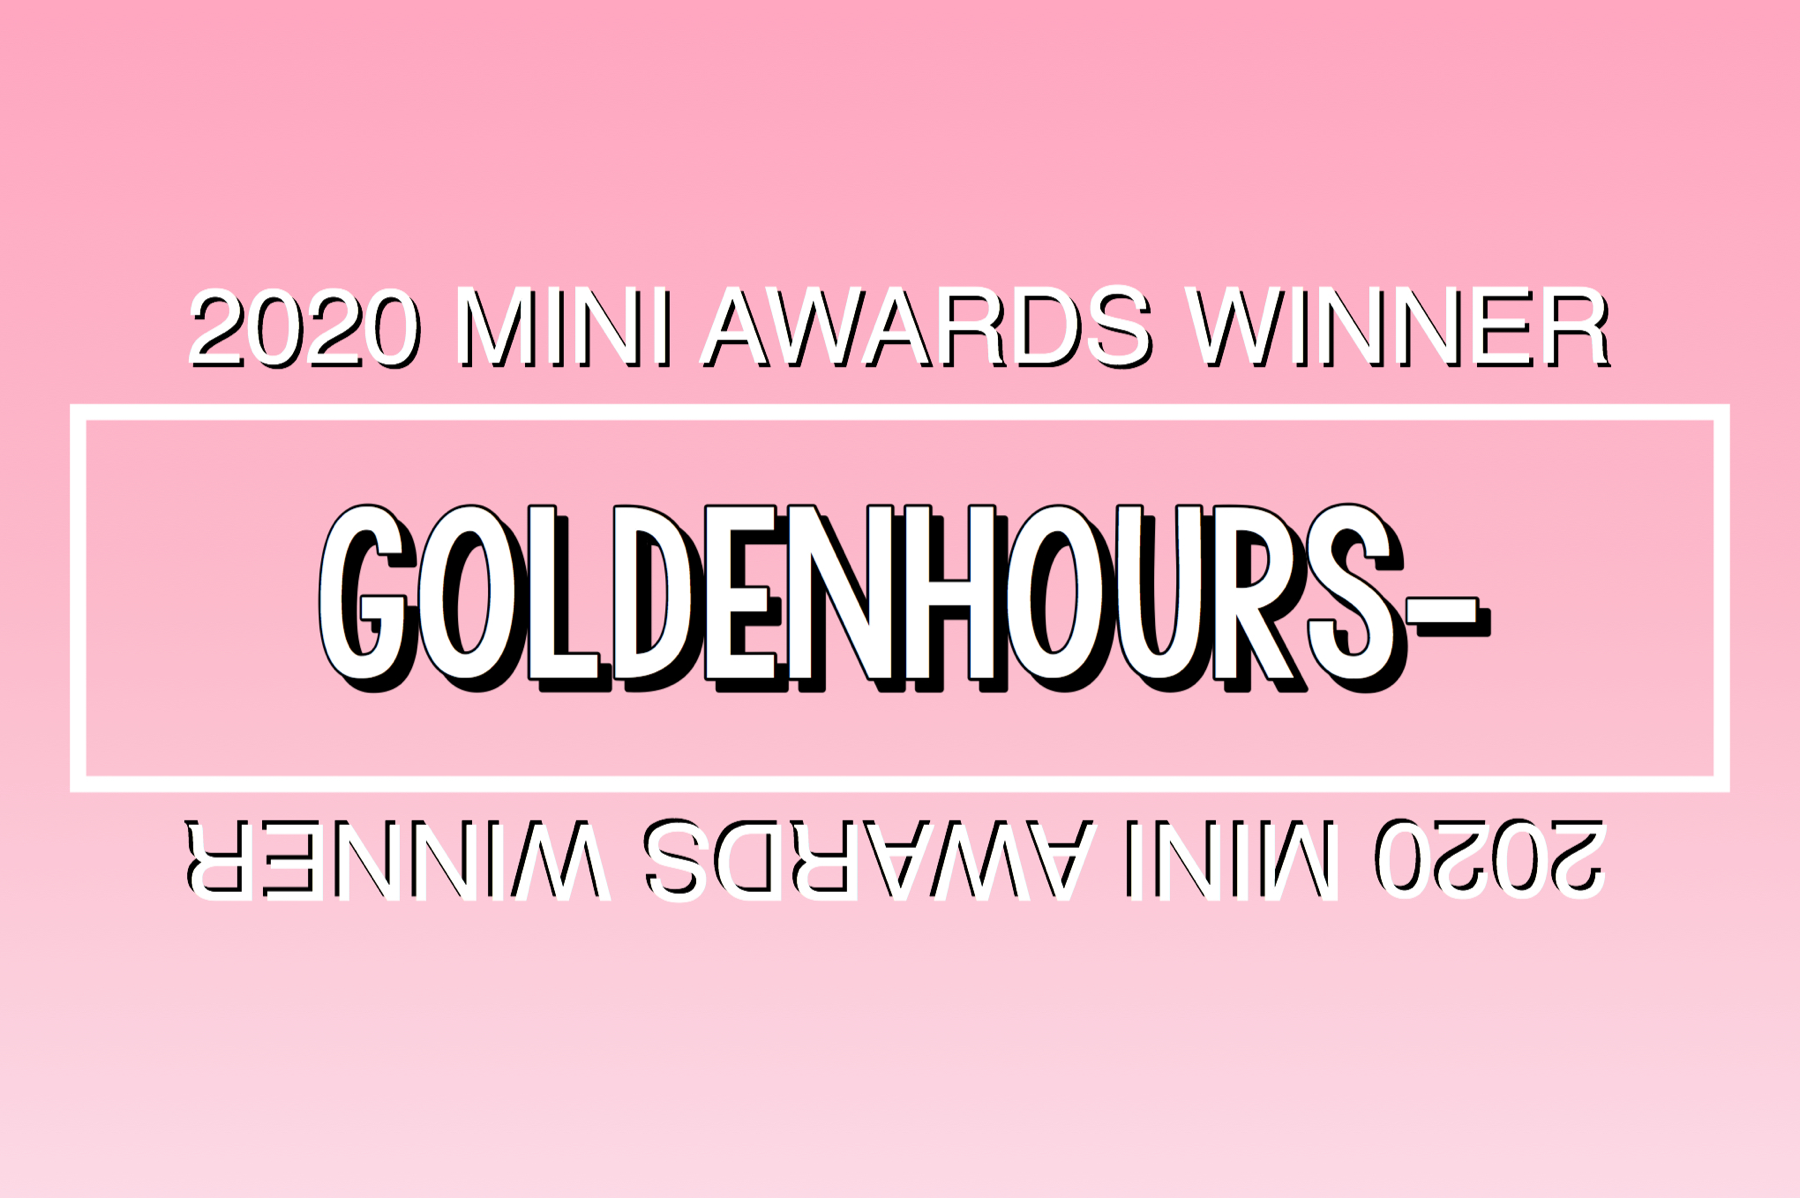 2020 Mini Awards Winner @goldenhours-!